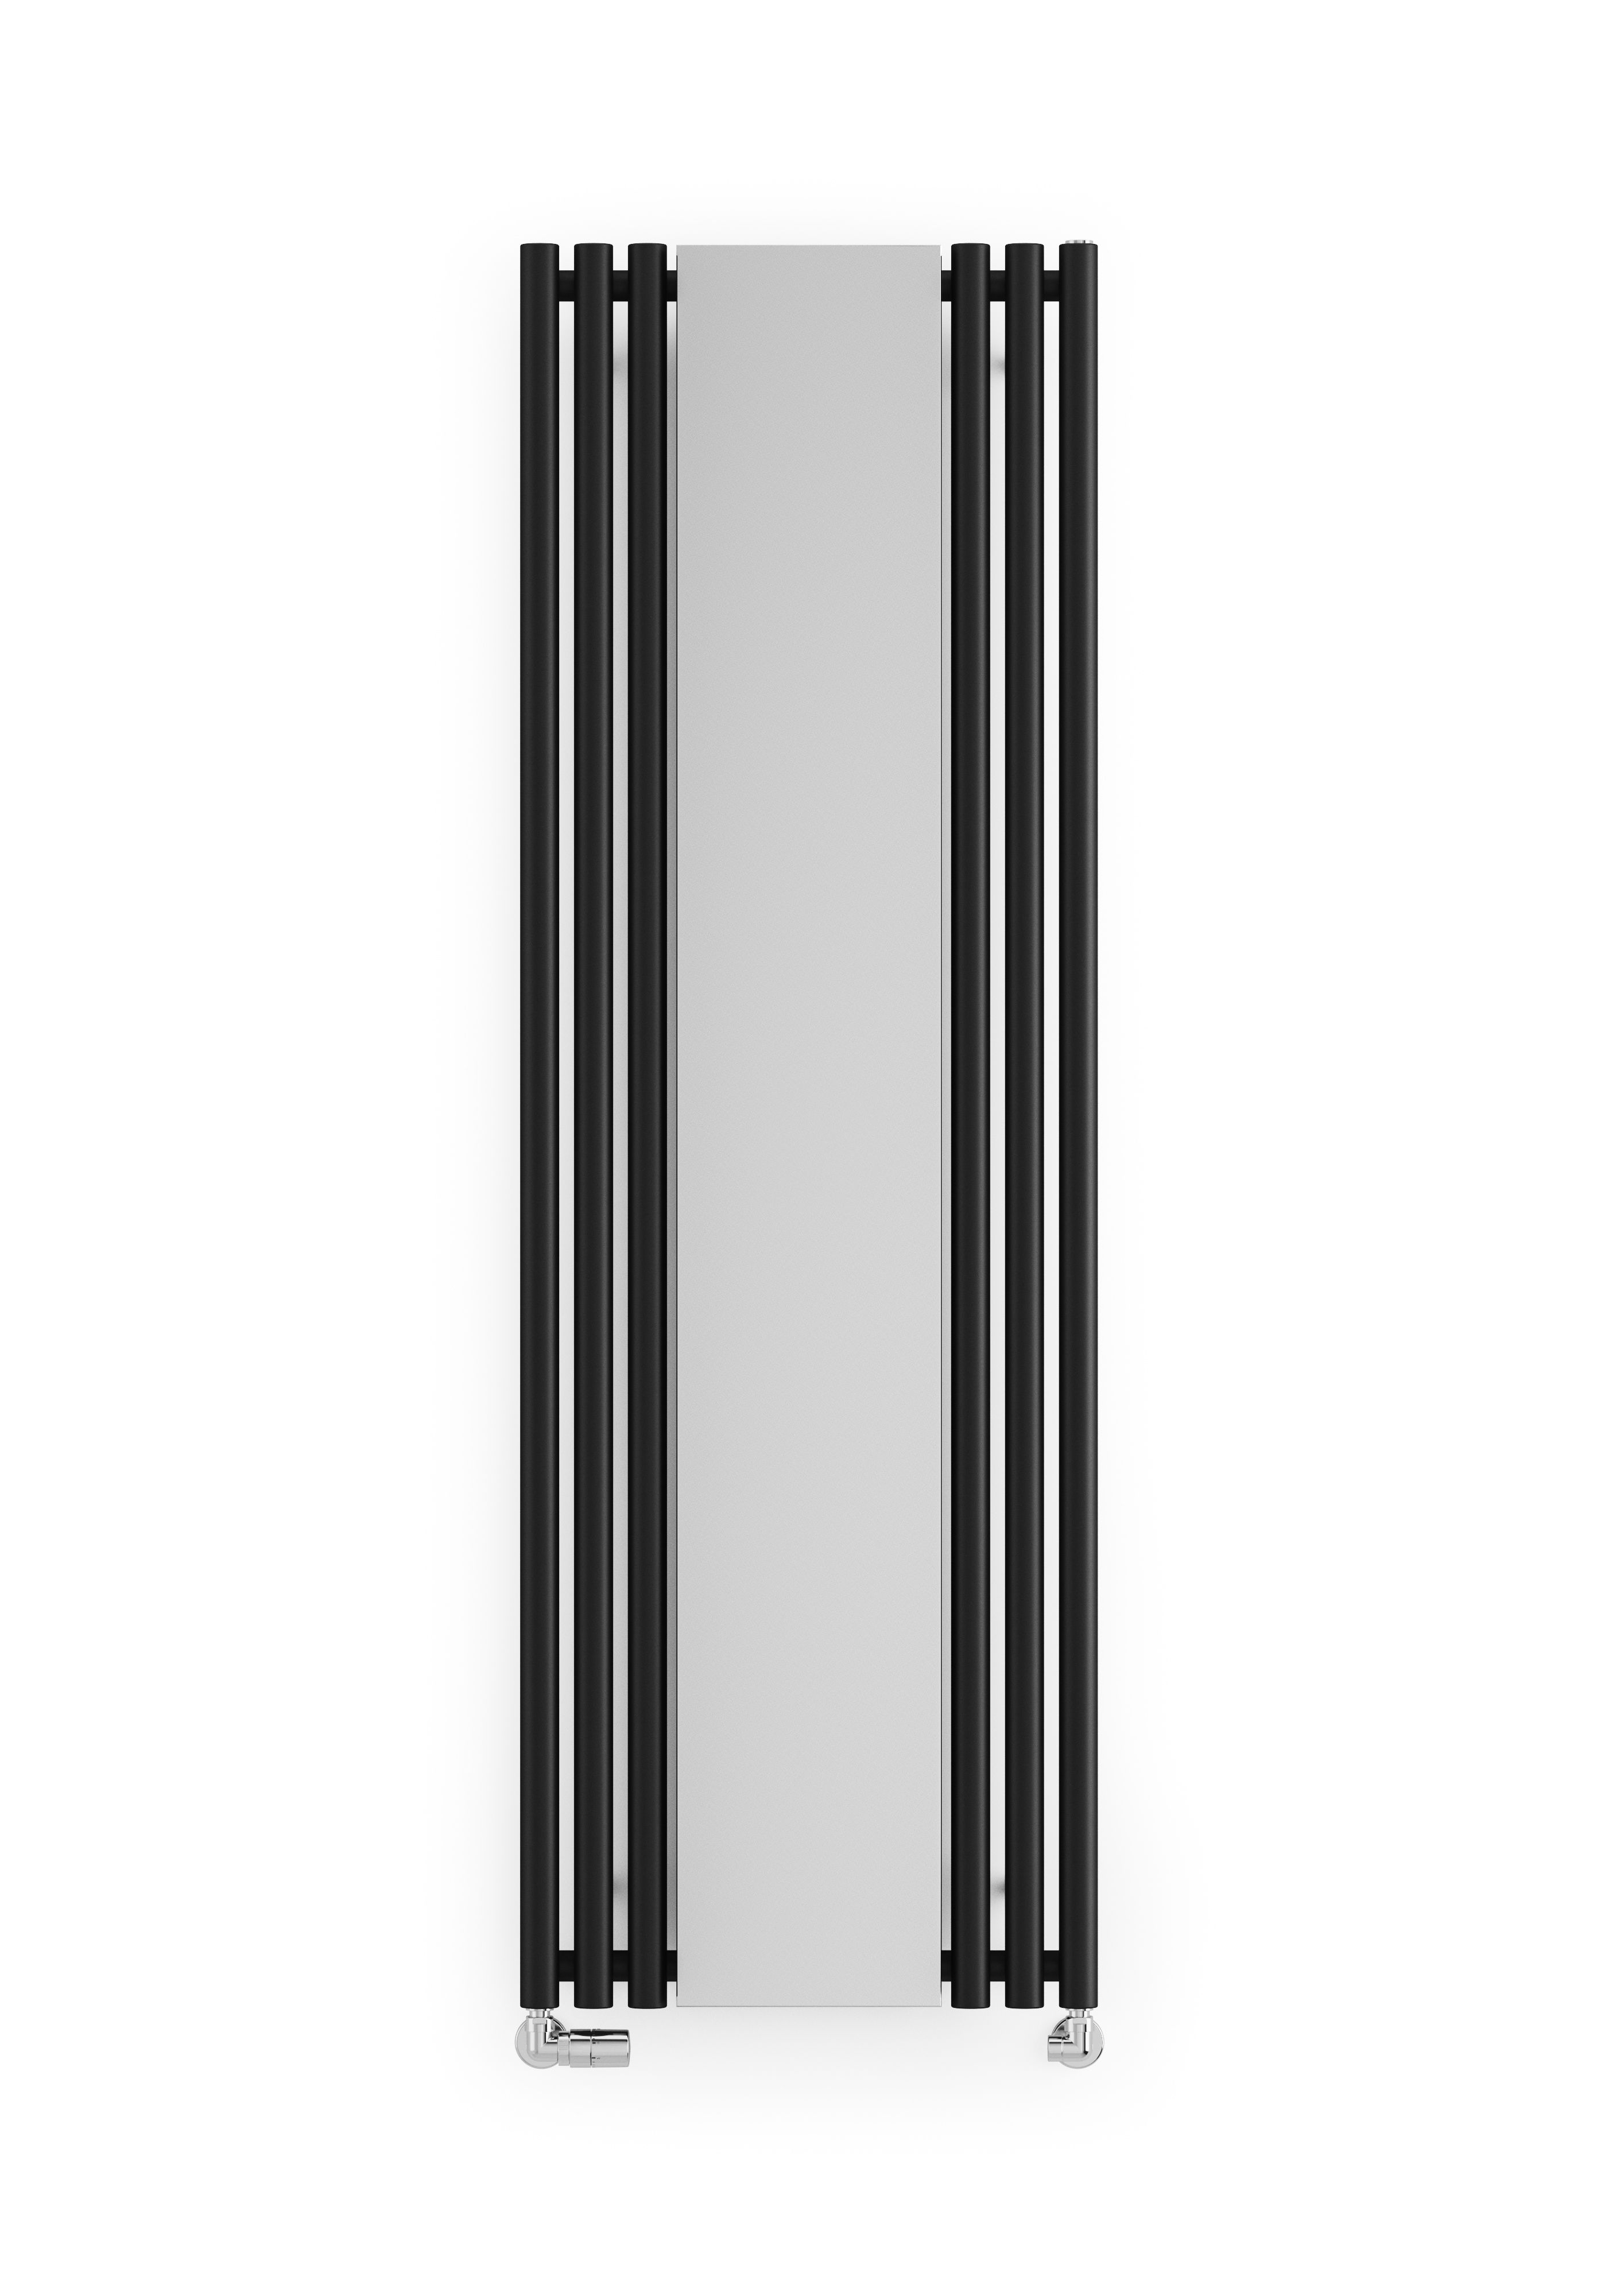 Terma Rolo Mirror Matt black Vertical Designer Radiator, (W)590mm x (H)1800mm